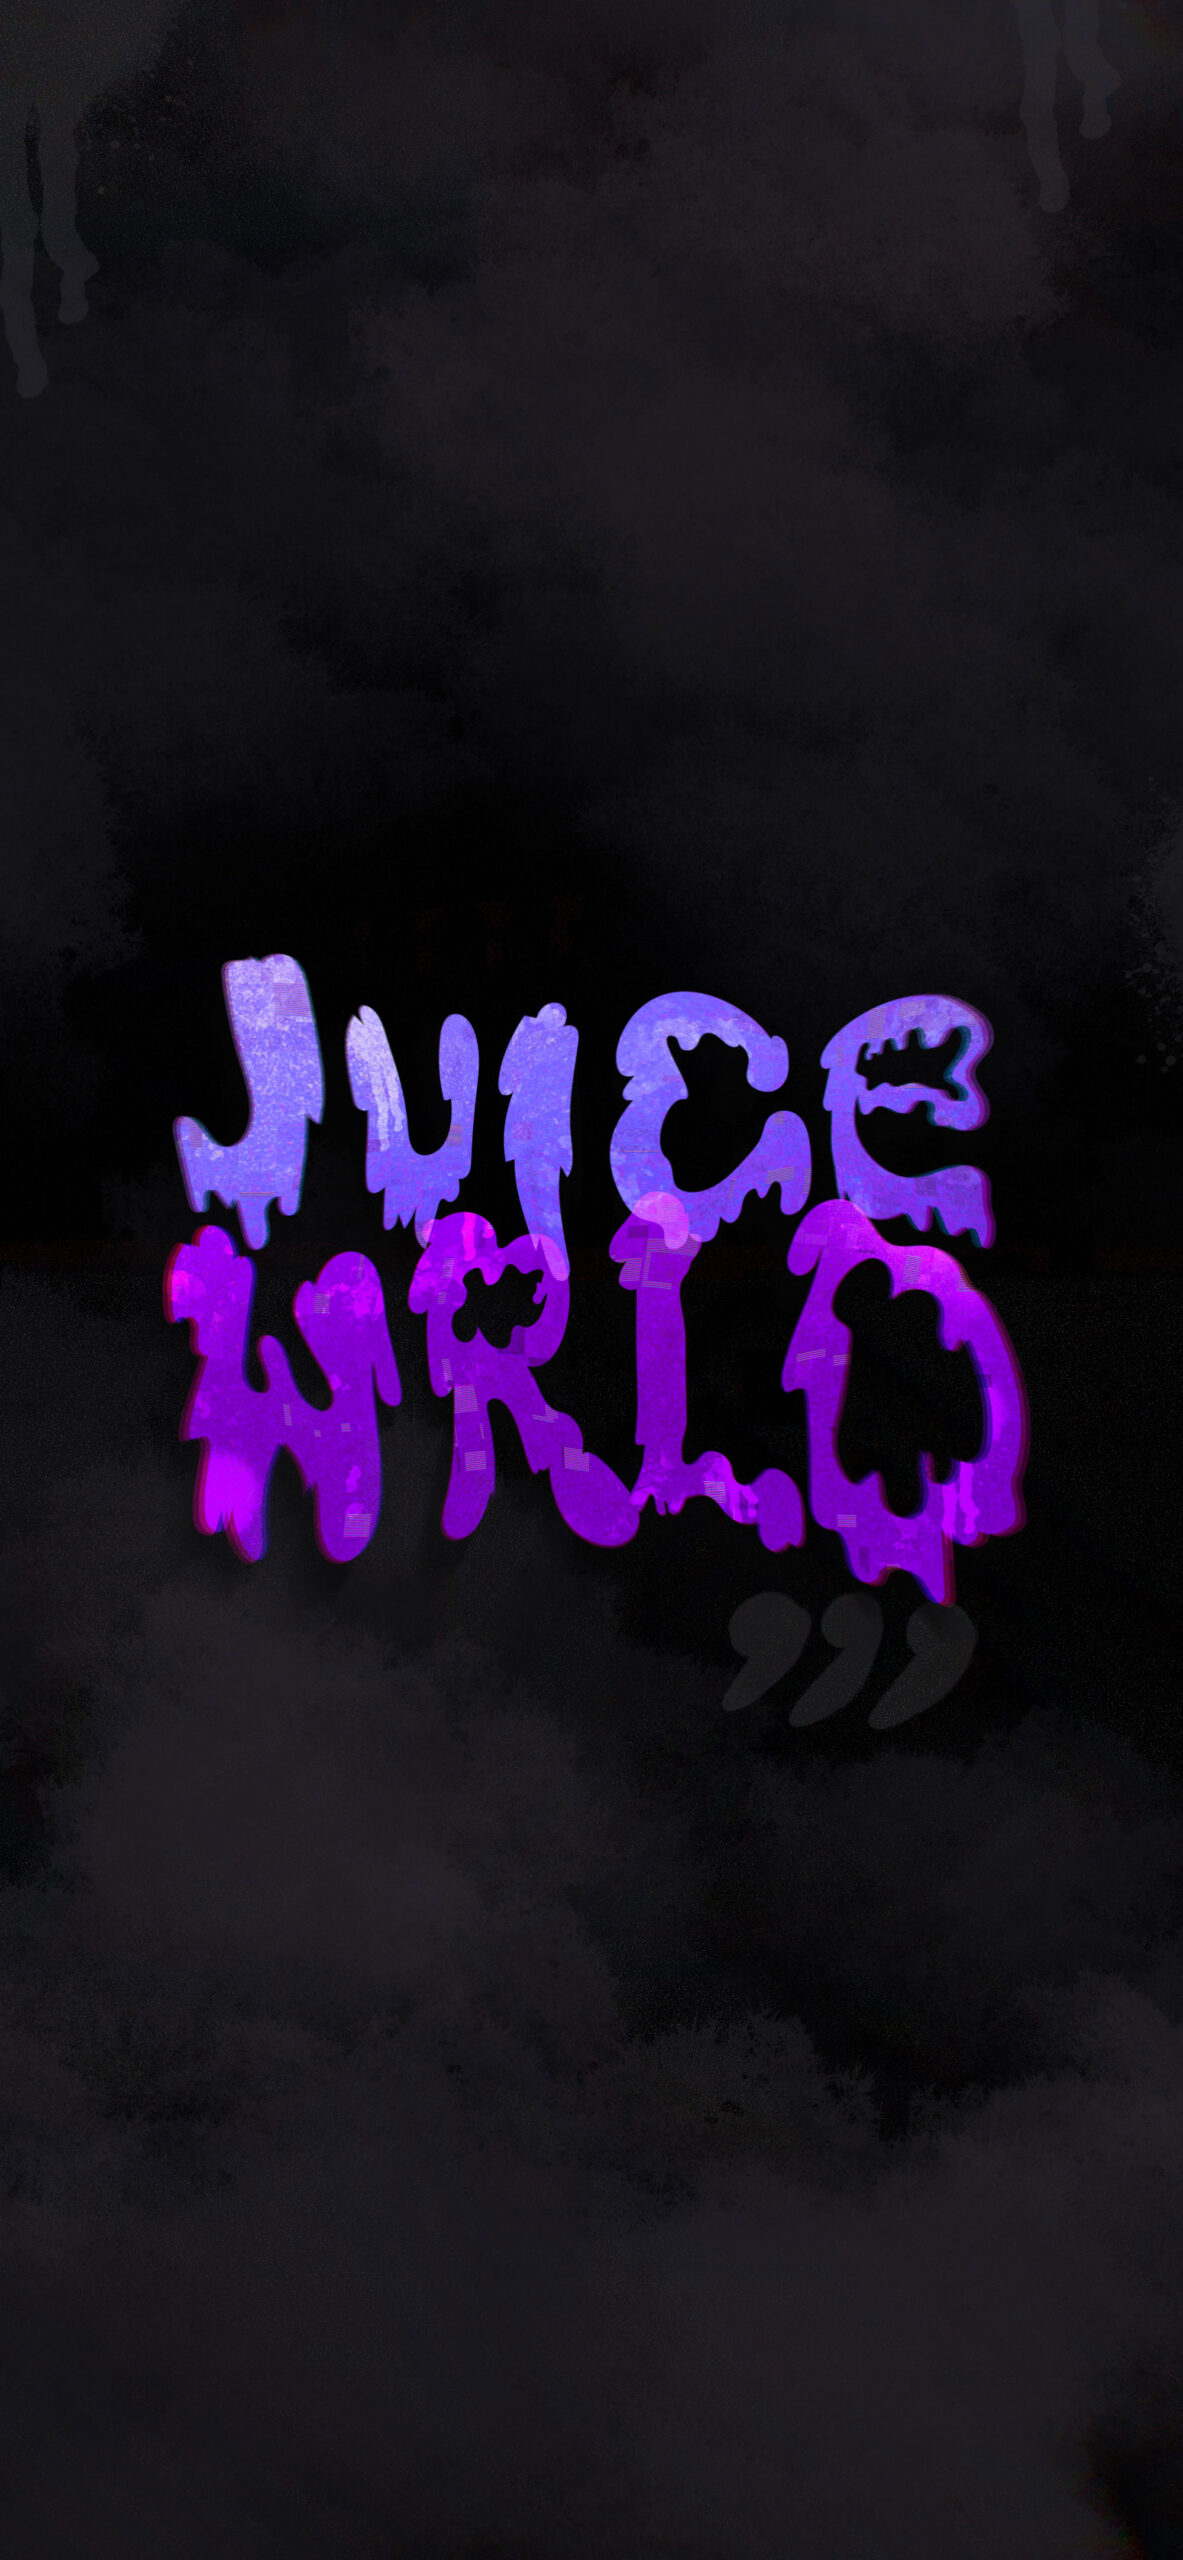 Juice wrld wallpaper on black background